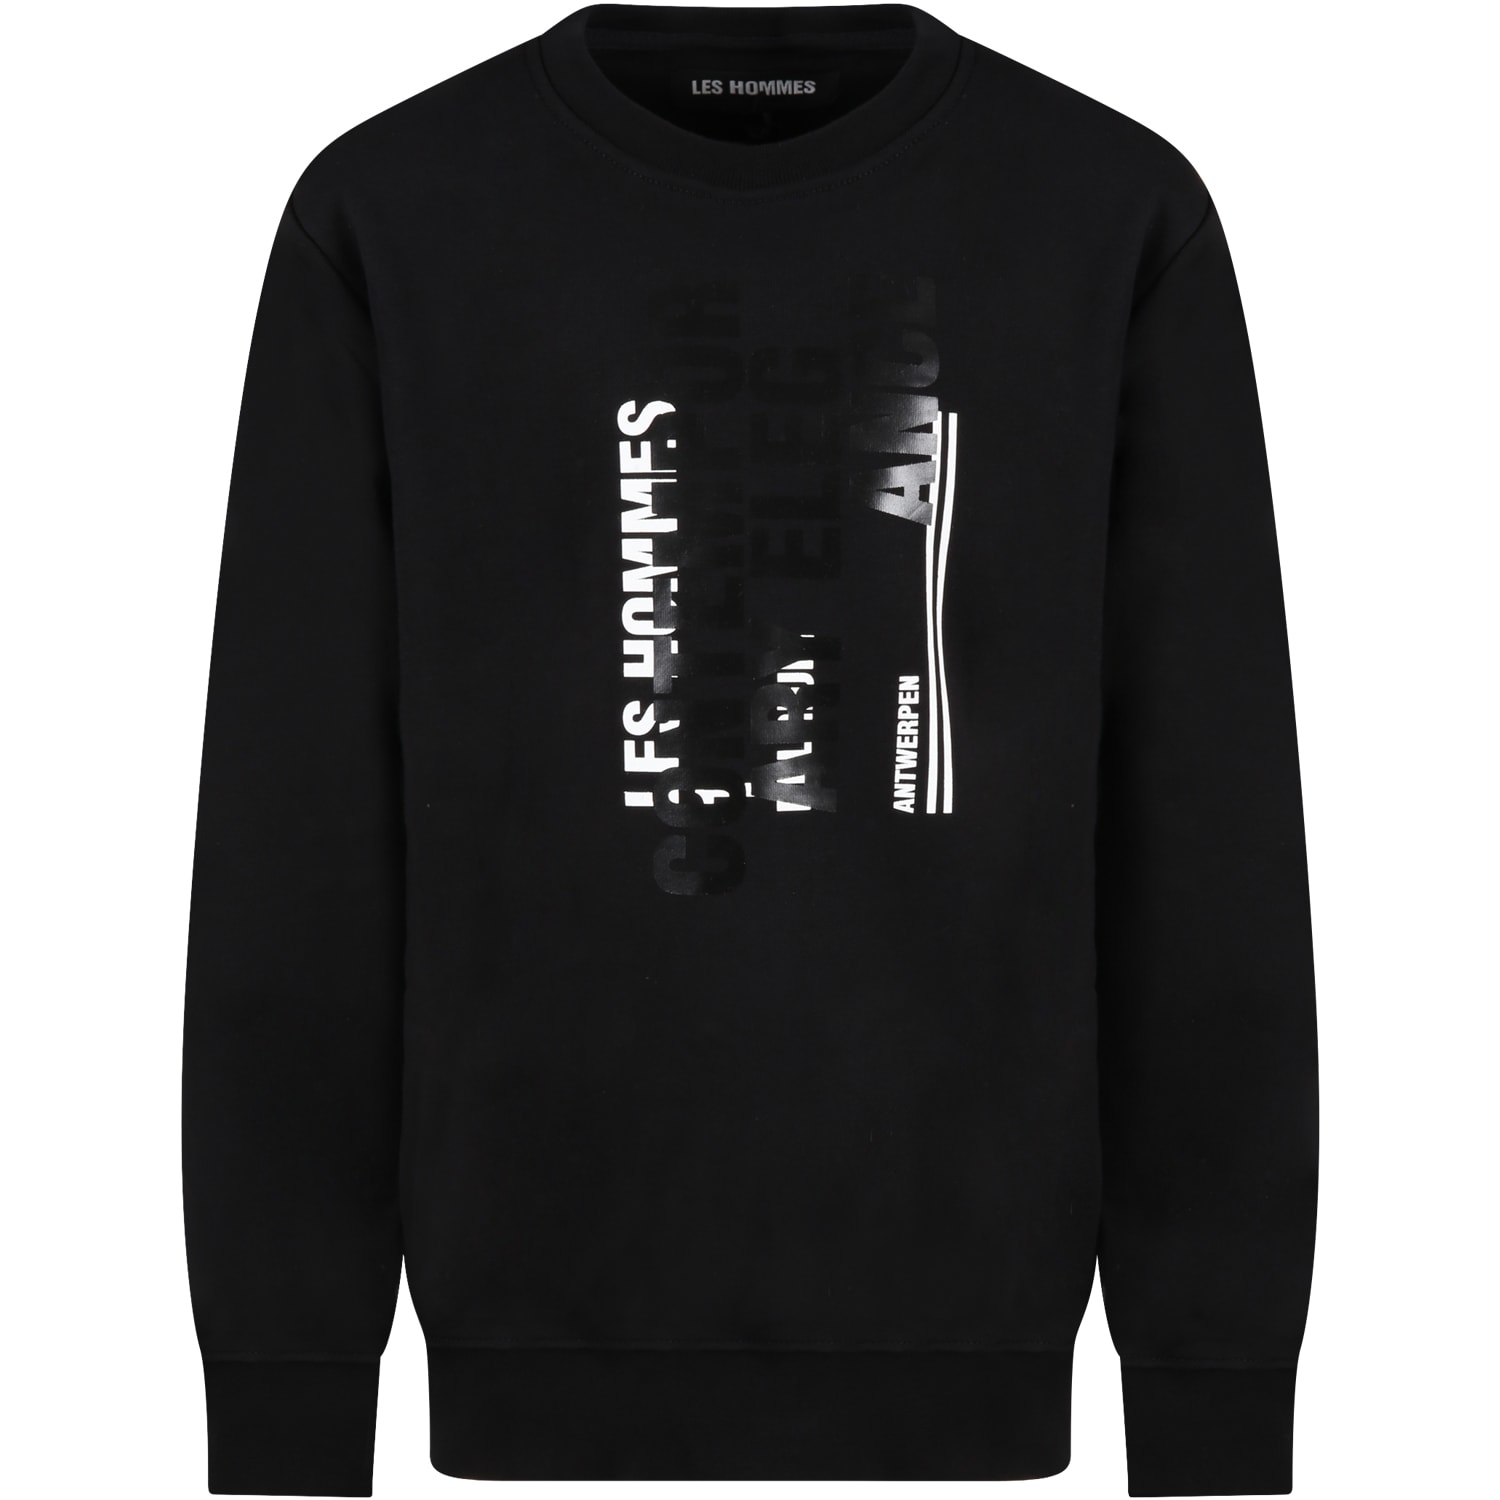 Les Hommes Black Sweatshirt For Boy With Logo